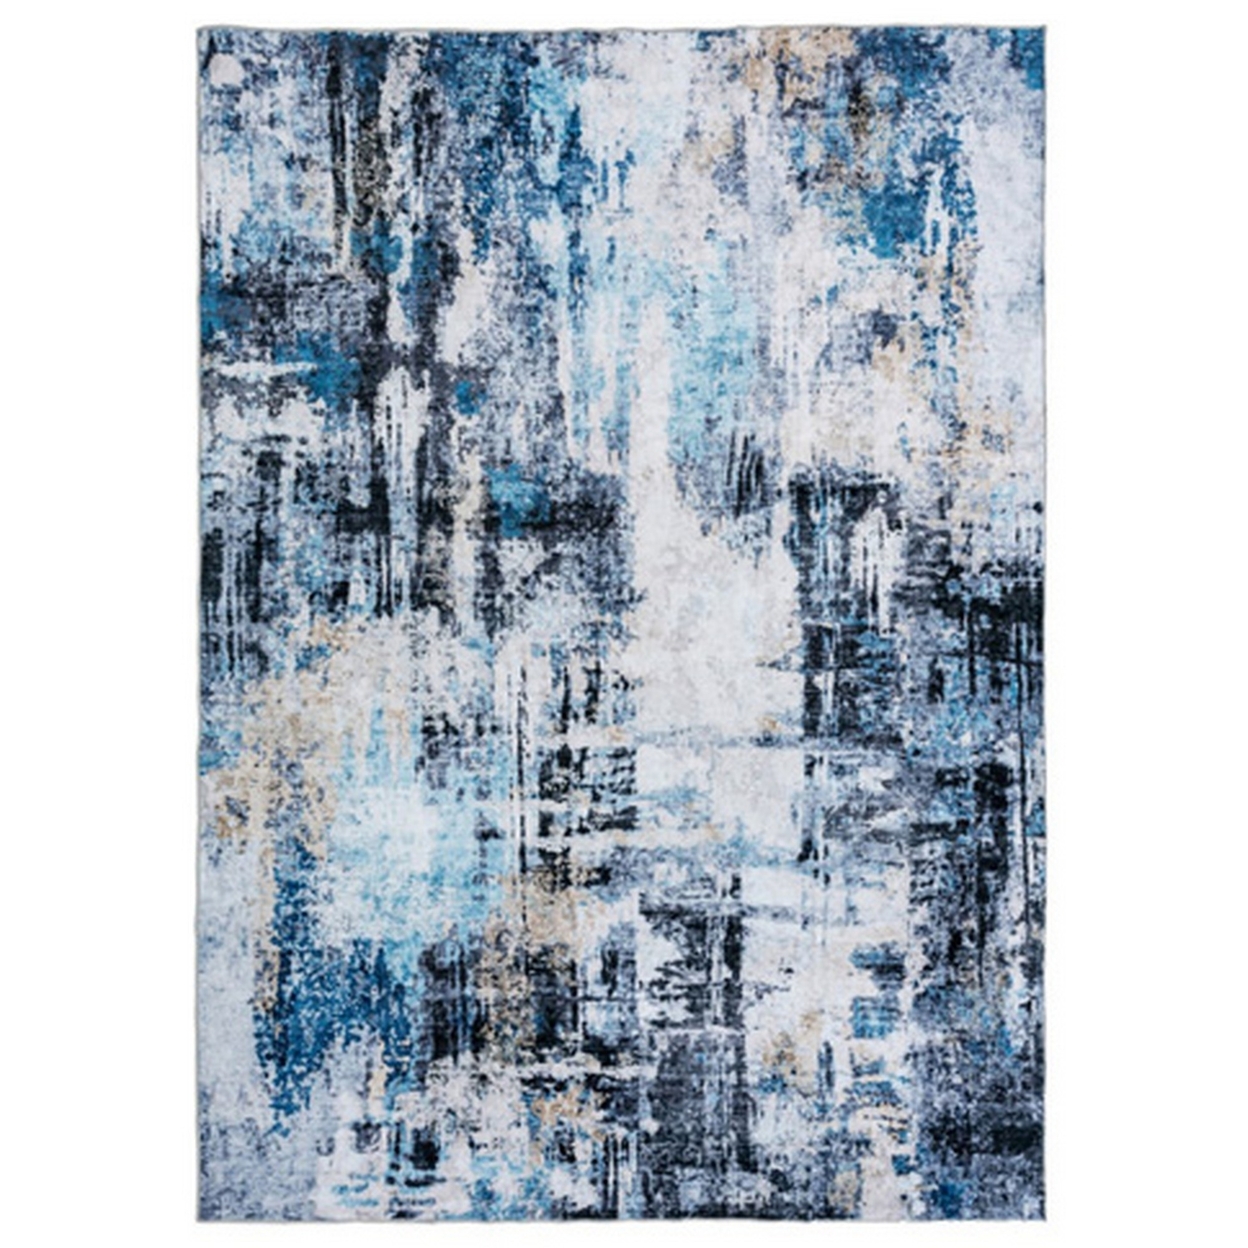 Rue 7 X 5 Medium Soft Fabric Floor Area Rug, Washable, Abstract Blue And White Design- Saltoro Sherpi